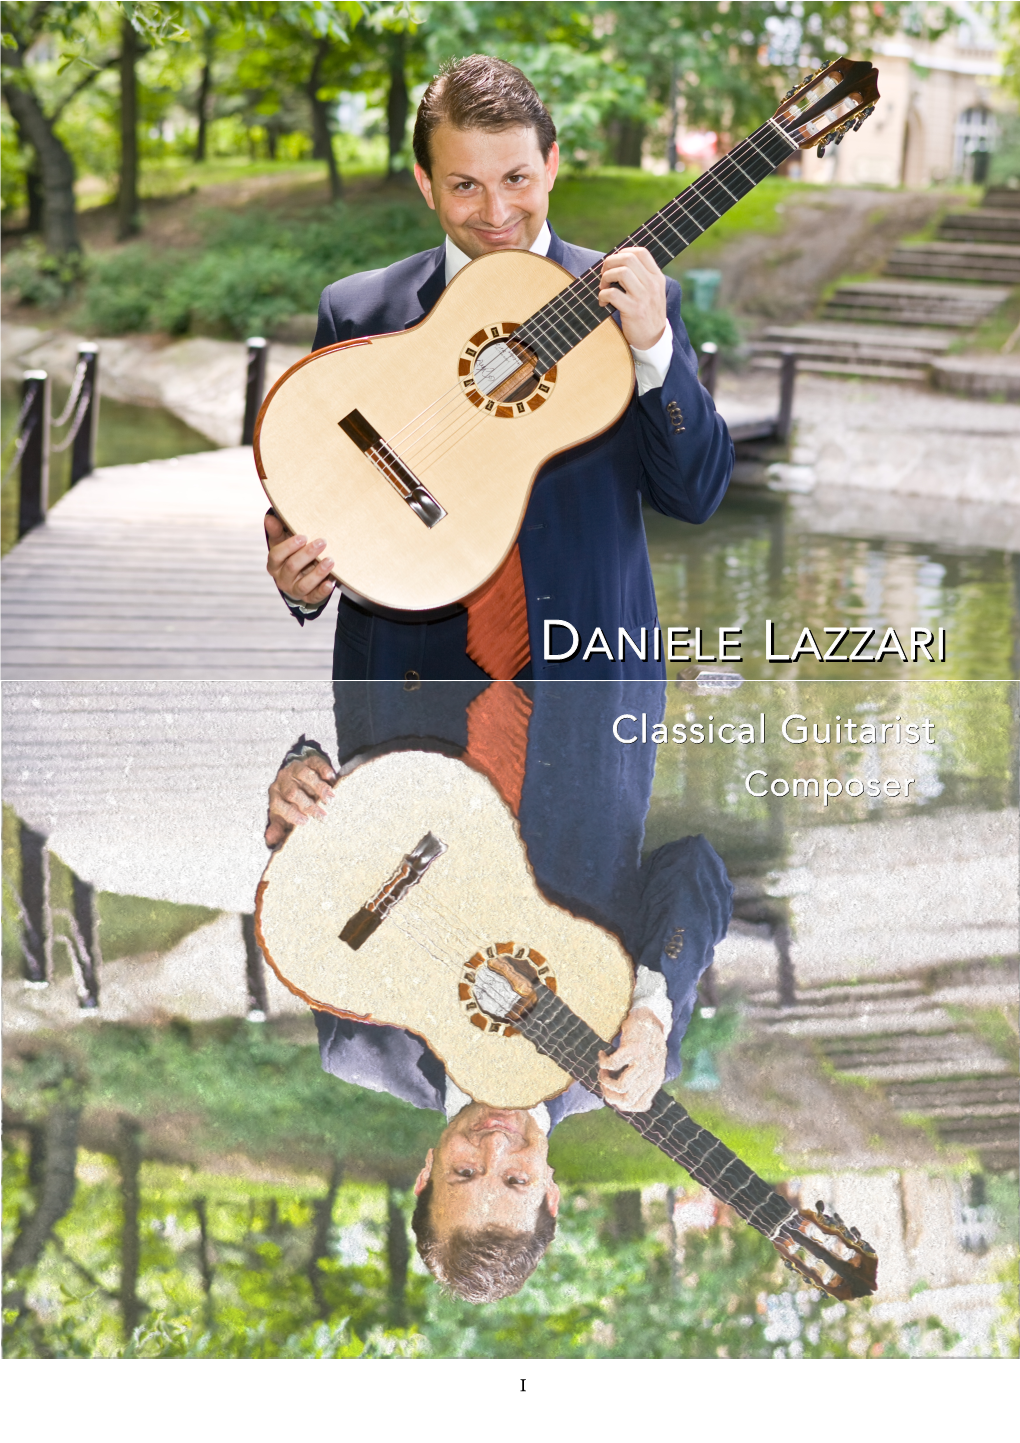 Daniele Lazzari Expresses Himself Through Music